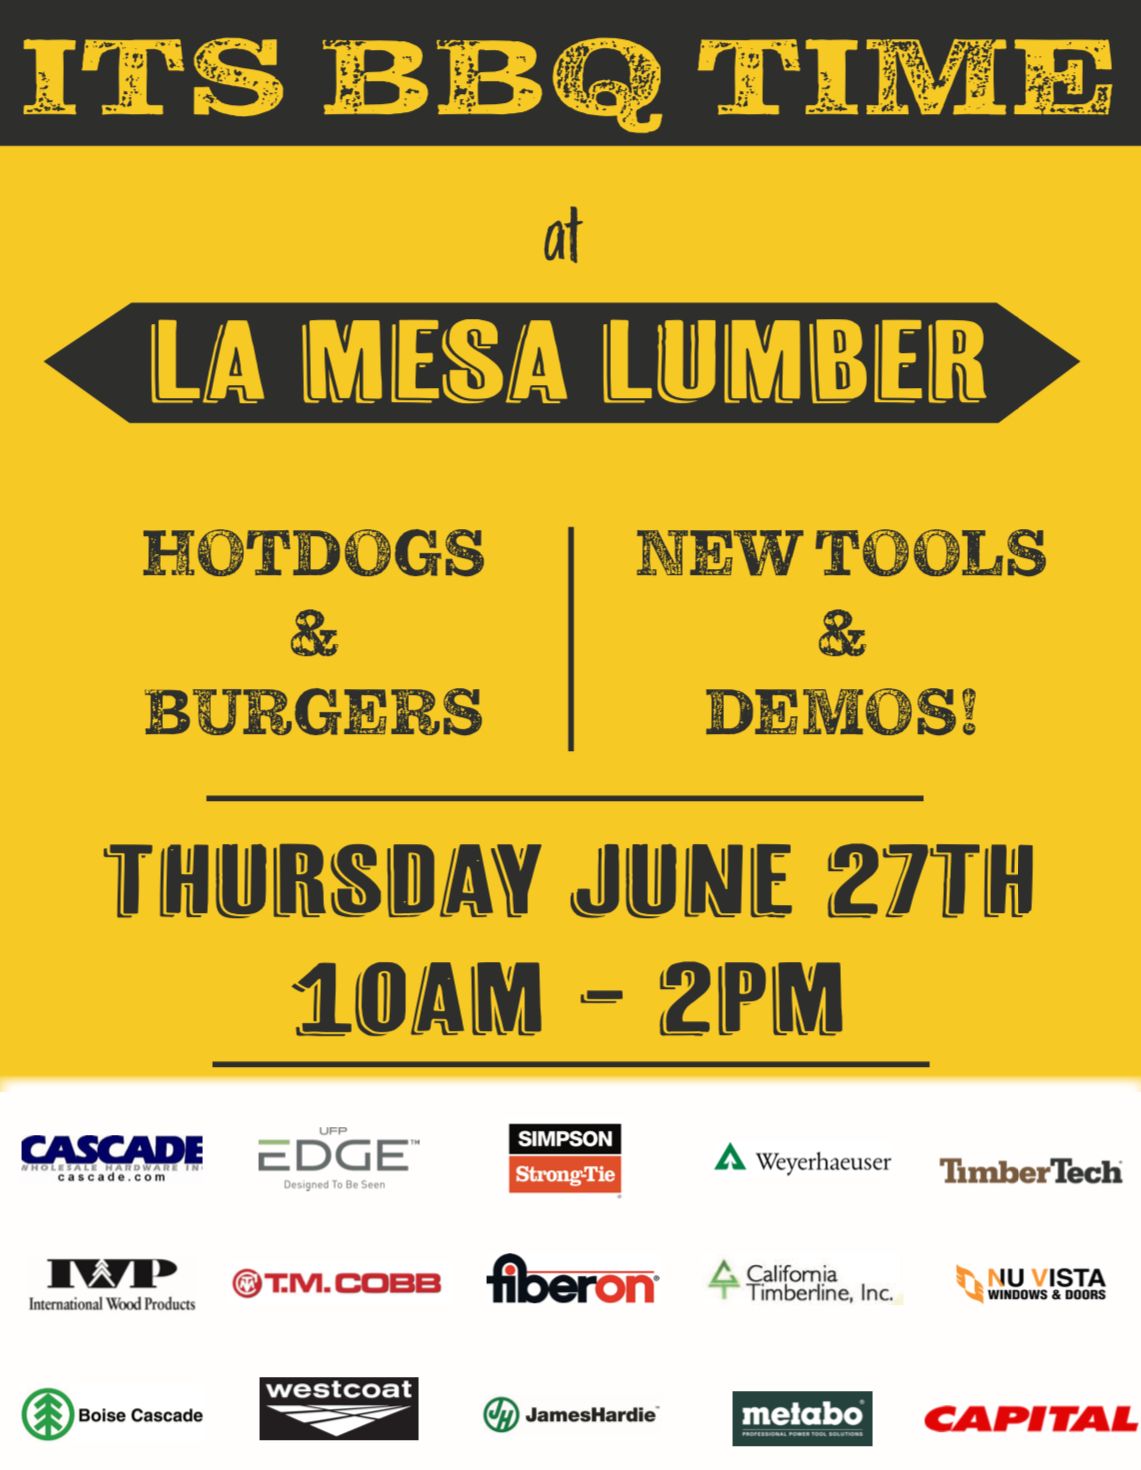 La Mesa Lumber BBQ & Product Showcase